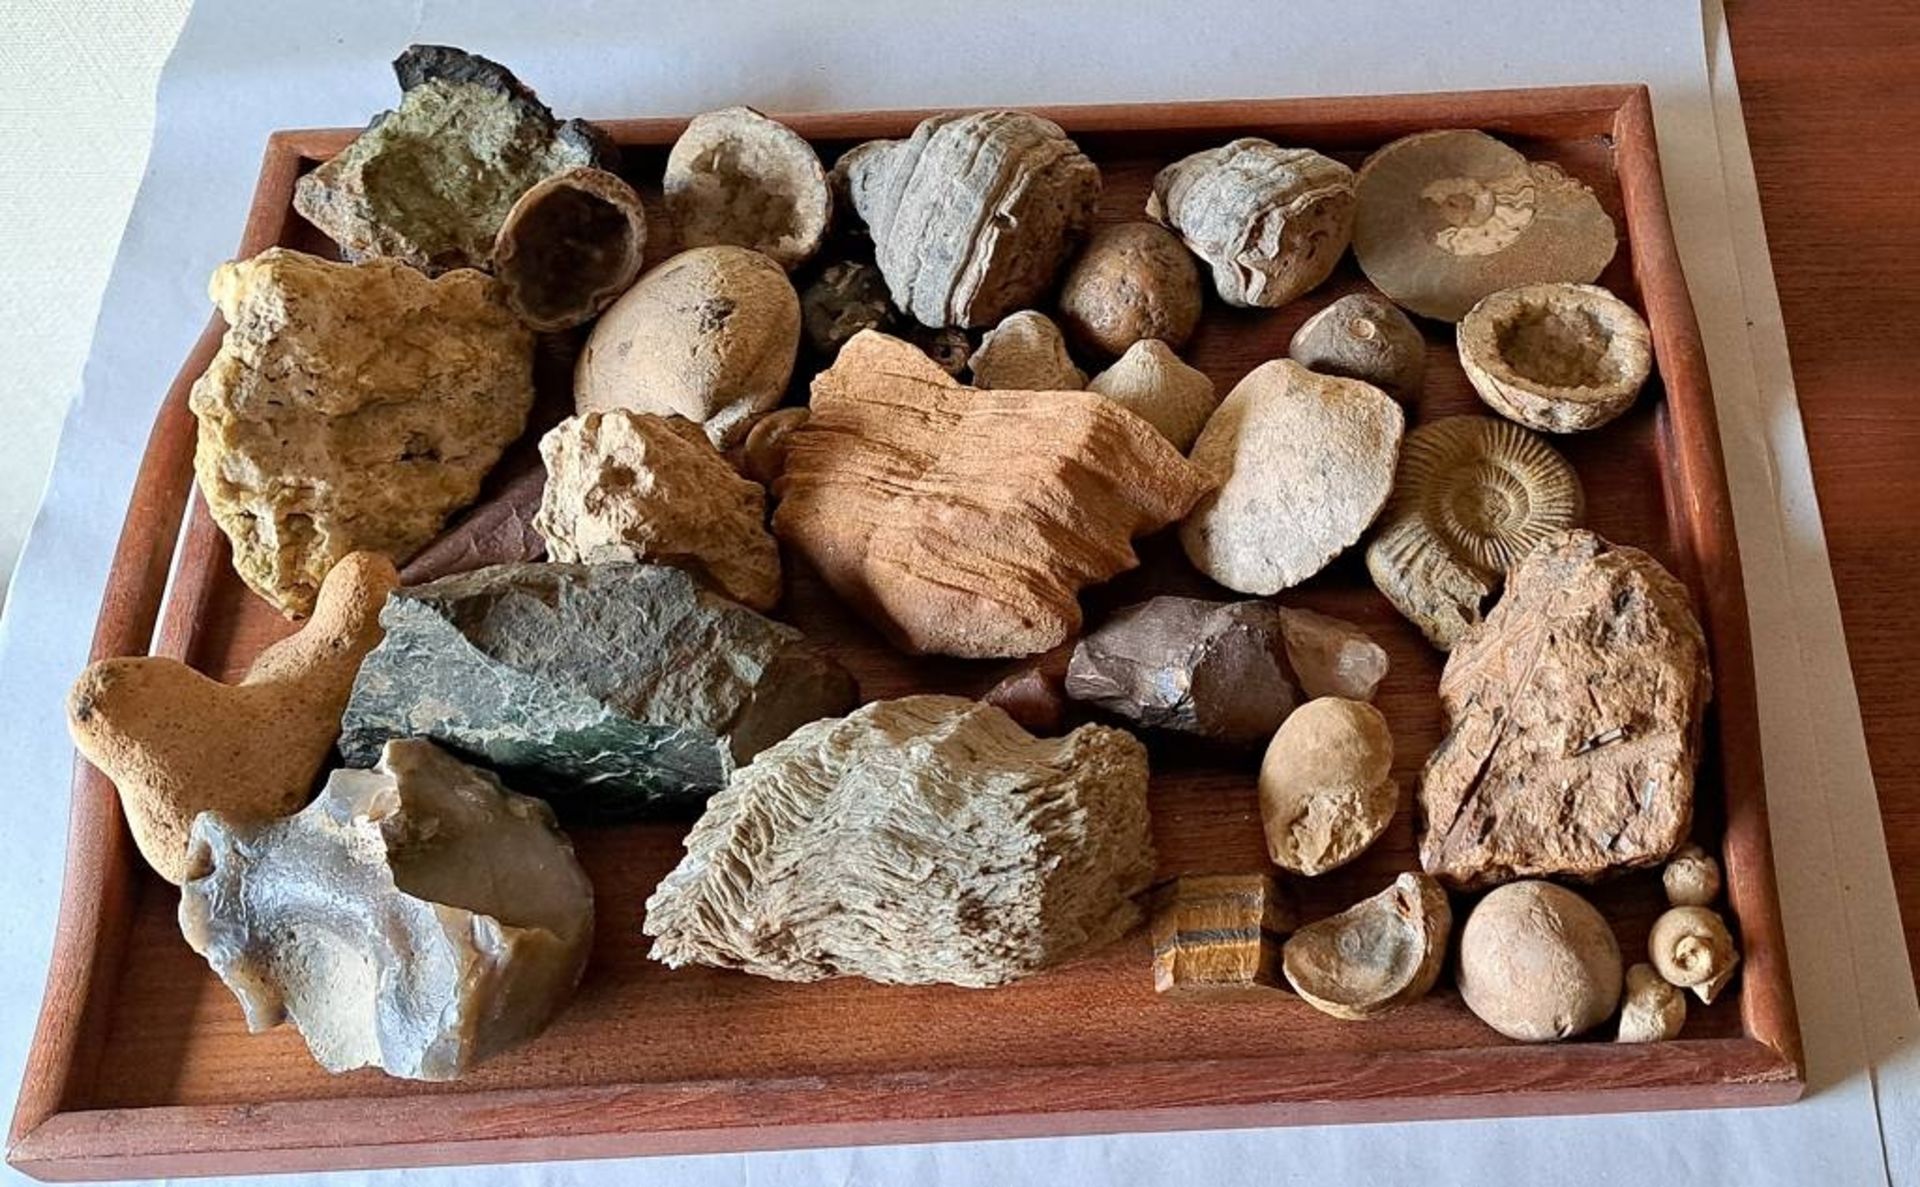 Tablett mit div. Mineralien, Fossilien etc.